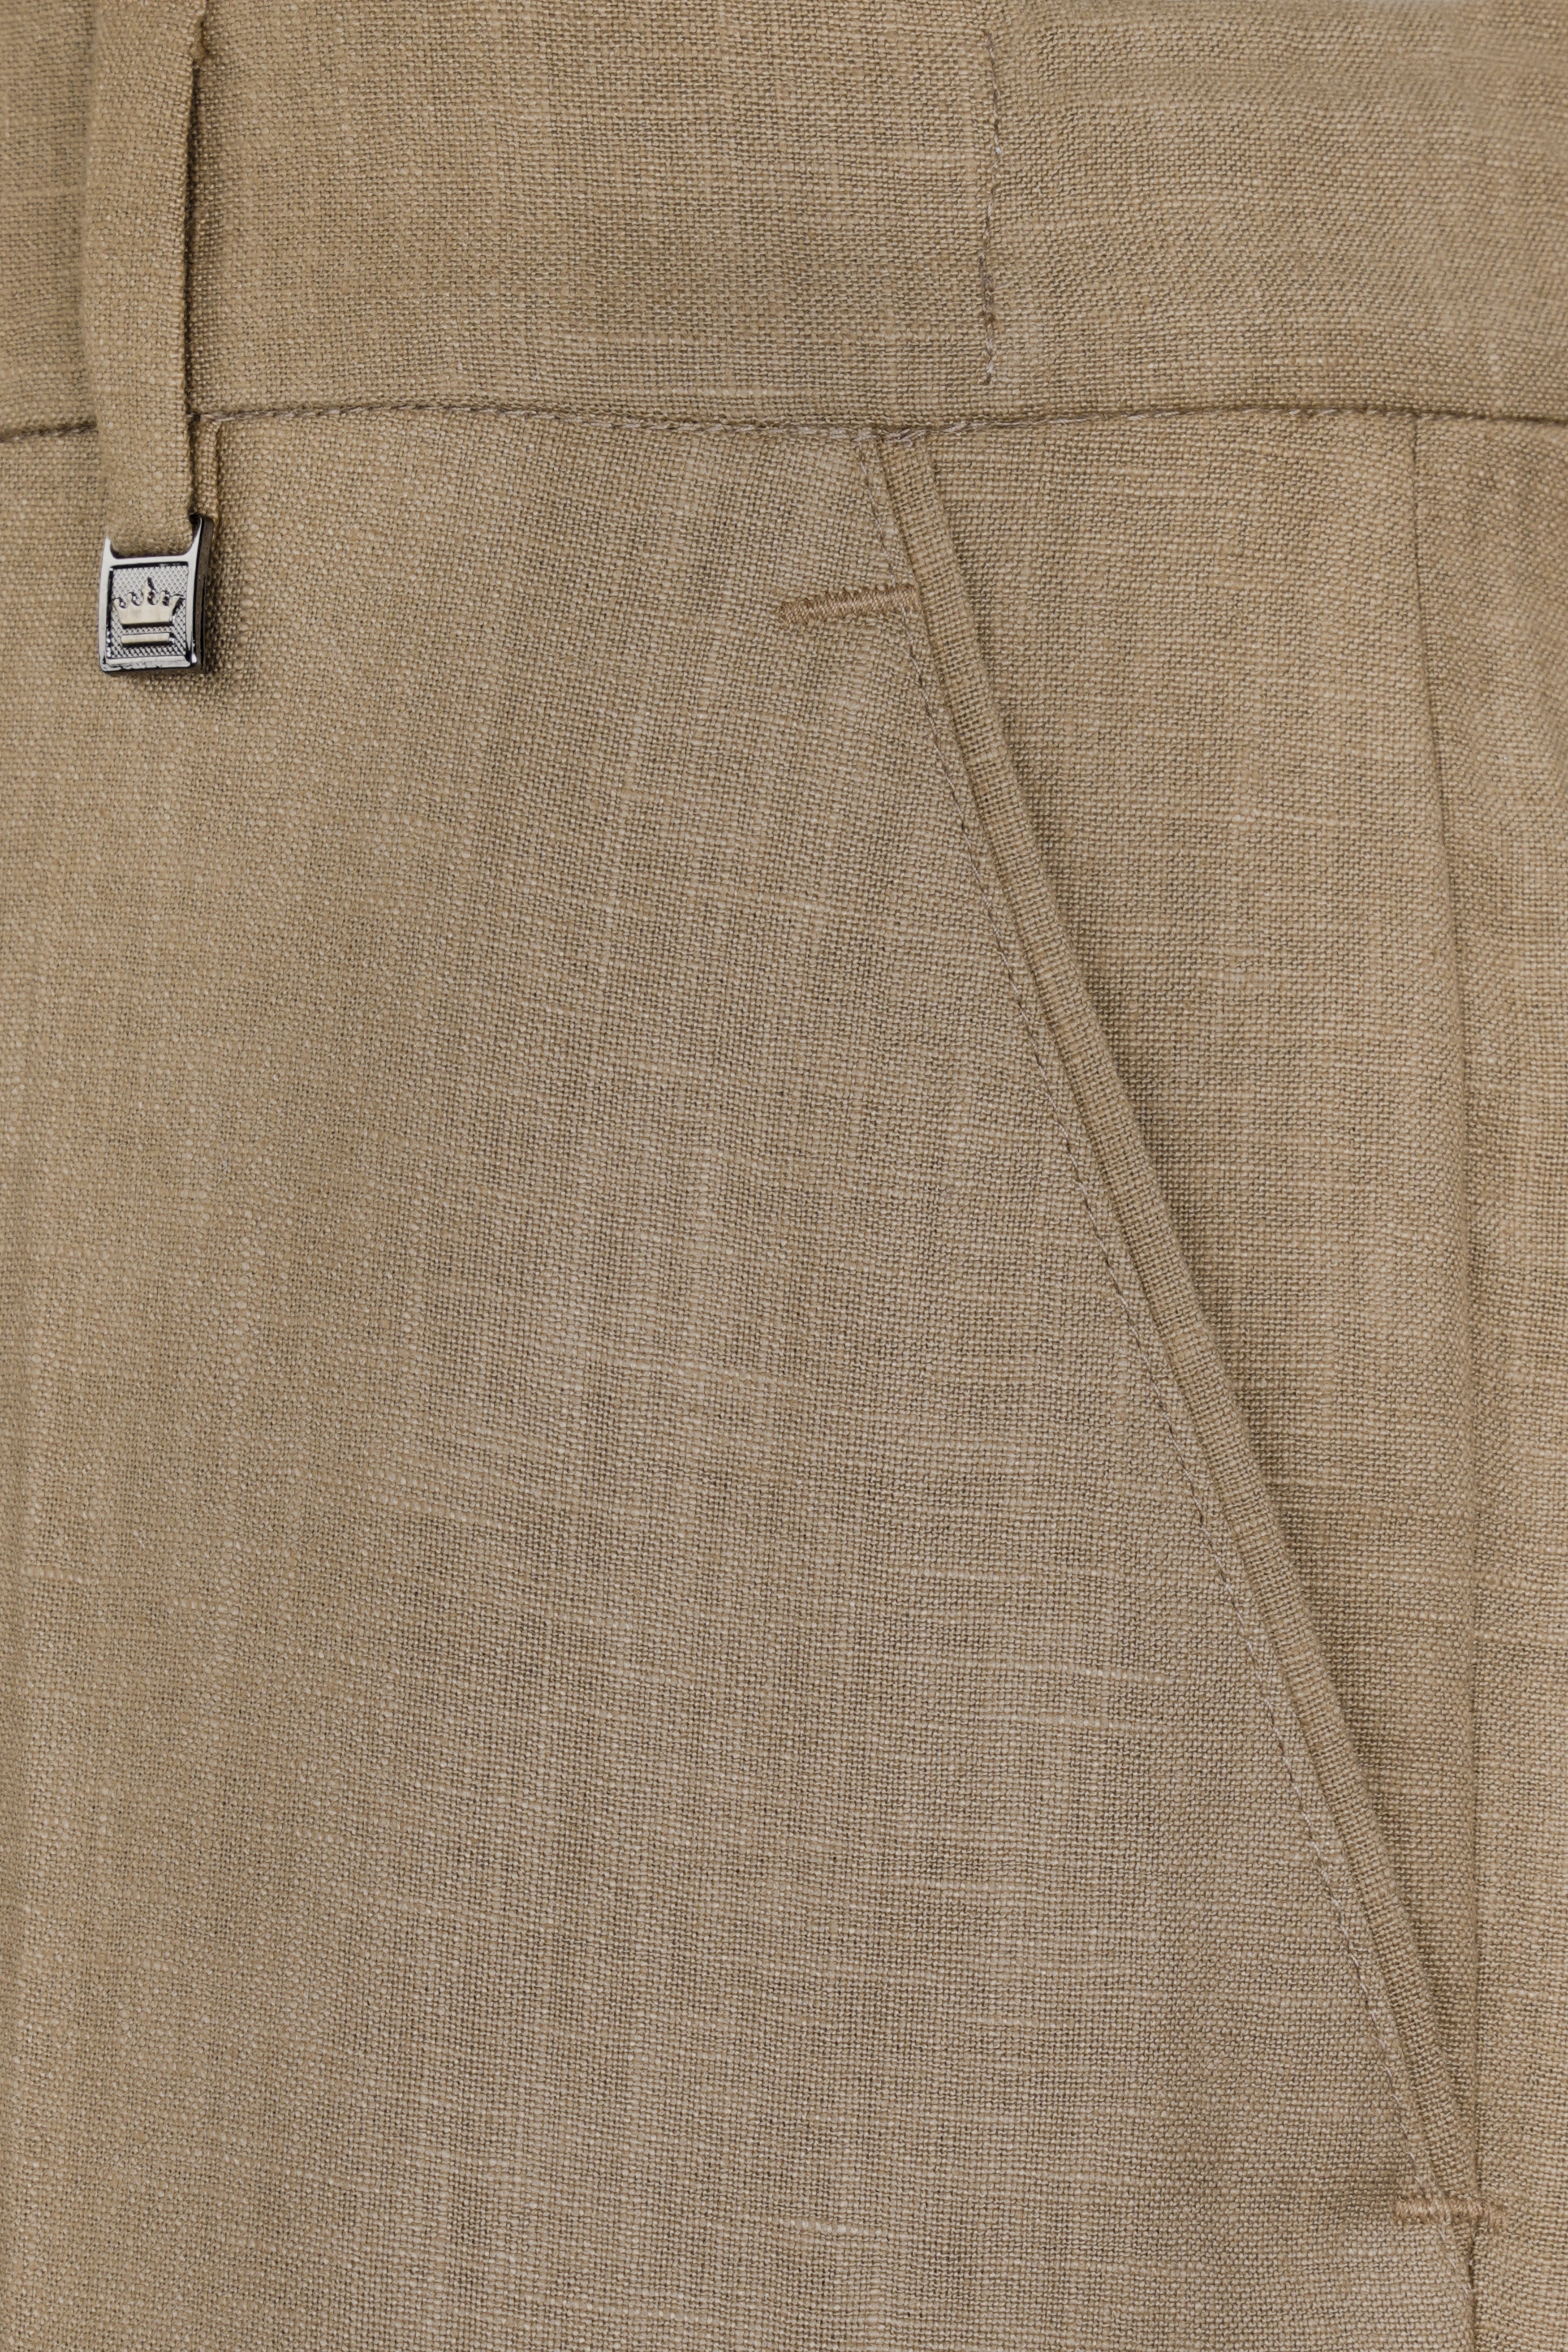 Trendy Chocolate Brown Linen Pants - Puja Shah – Label Puja Shah